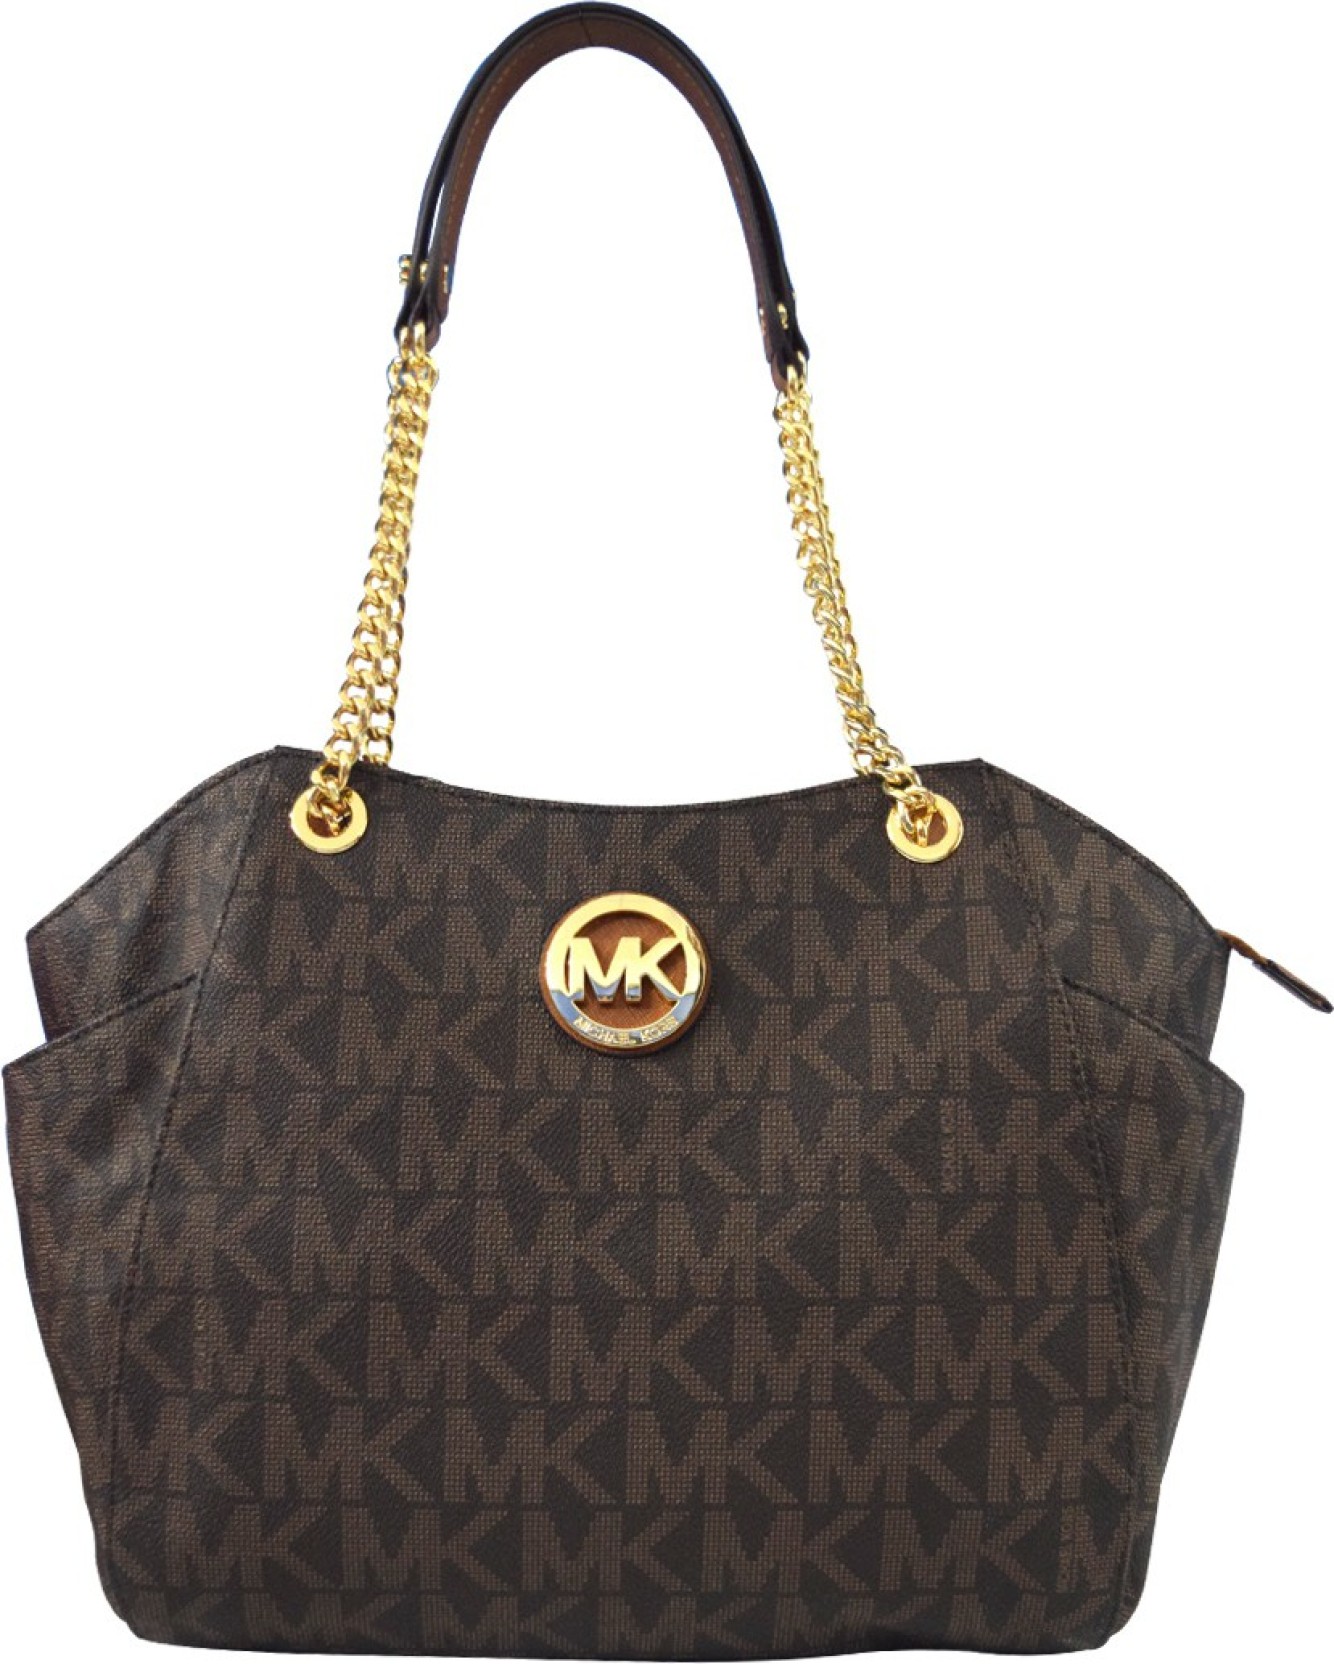 michael kors handbags on sale online